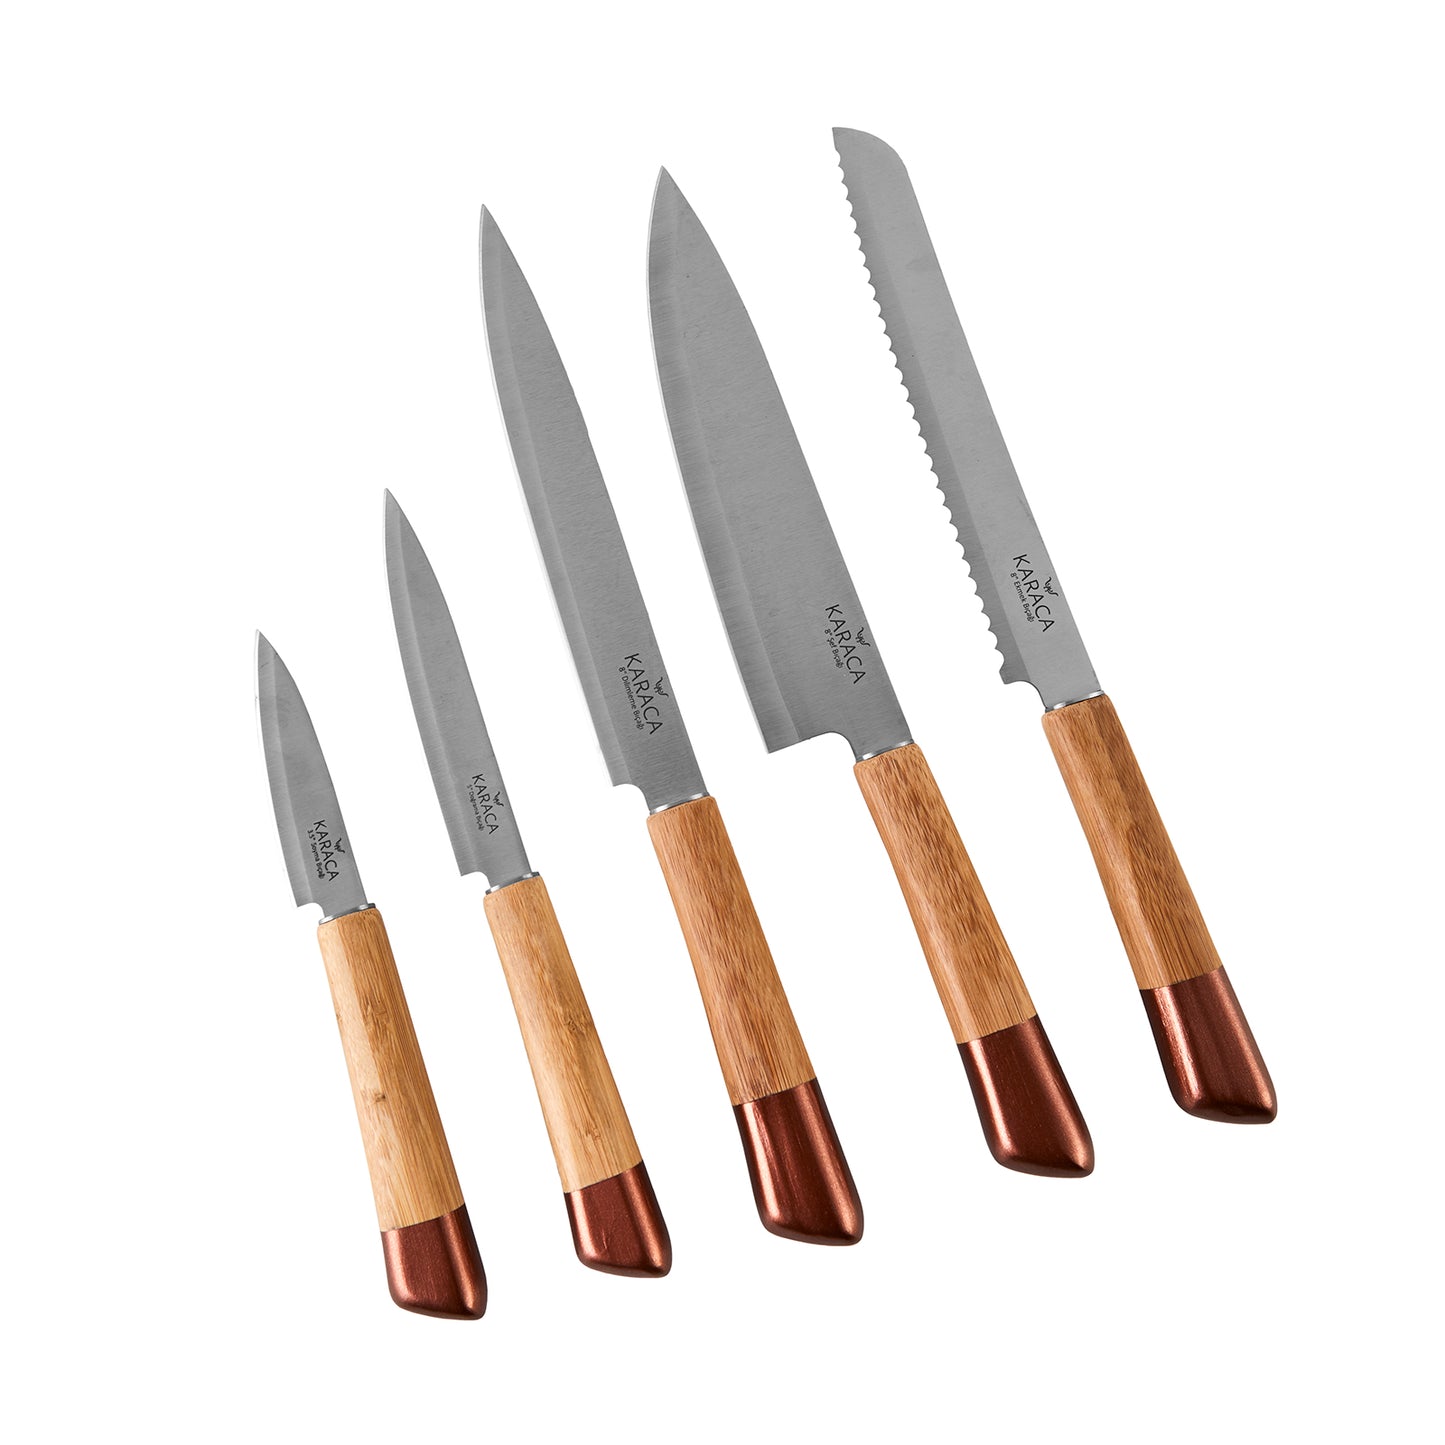 Karaca Maple Knife Set with Block, 5 Piece, Rose Gold